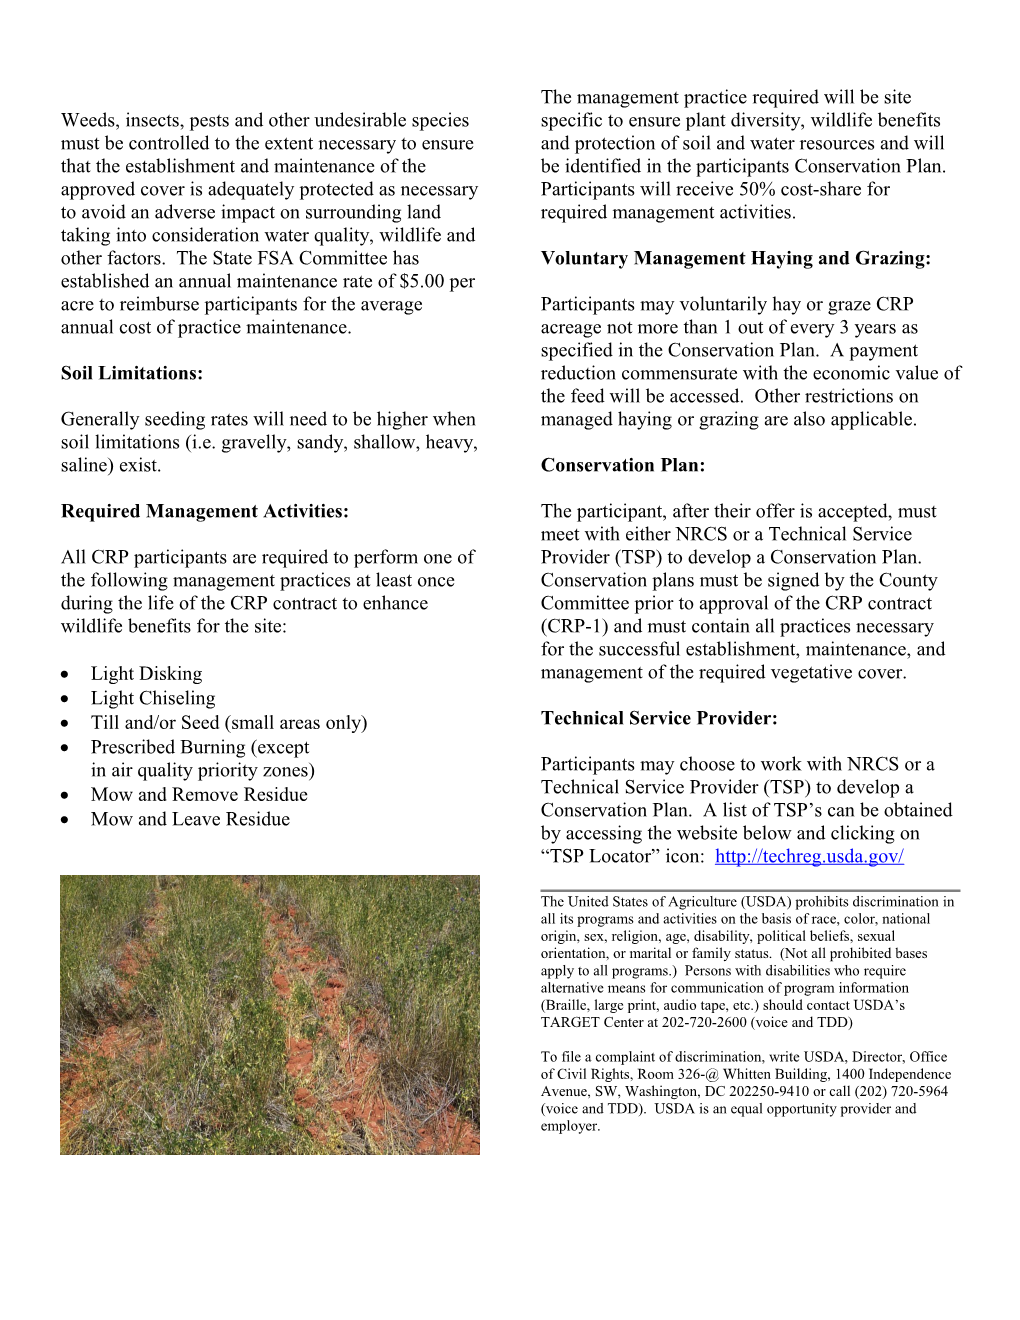 CP1 Establishment of Permanent Introduced Grasses and Legumes